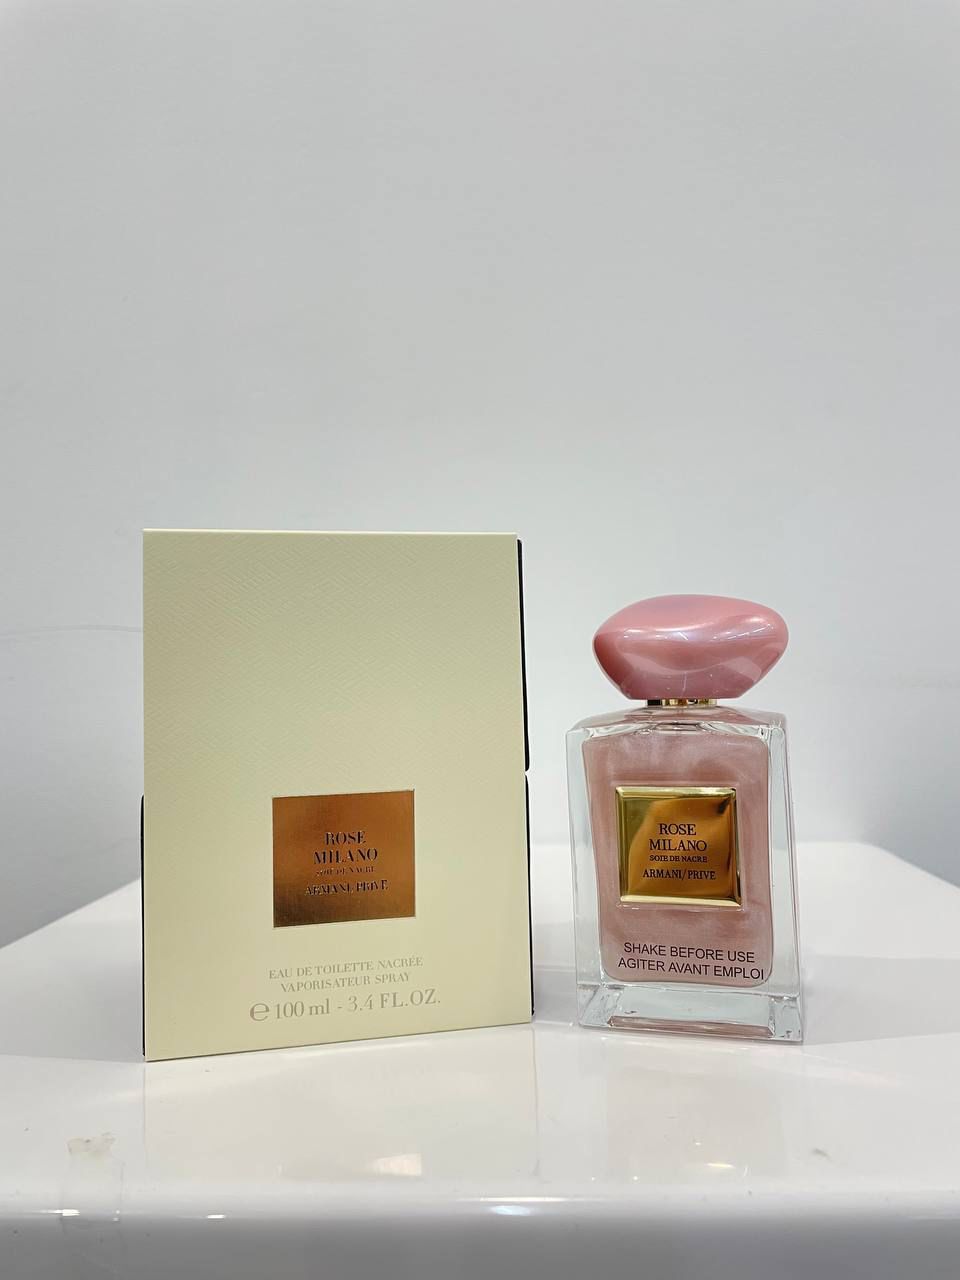 ARMANI / PRIVE ROSE MILANO EDT 100ML (NACRE EDITION) – Perfume